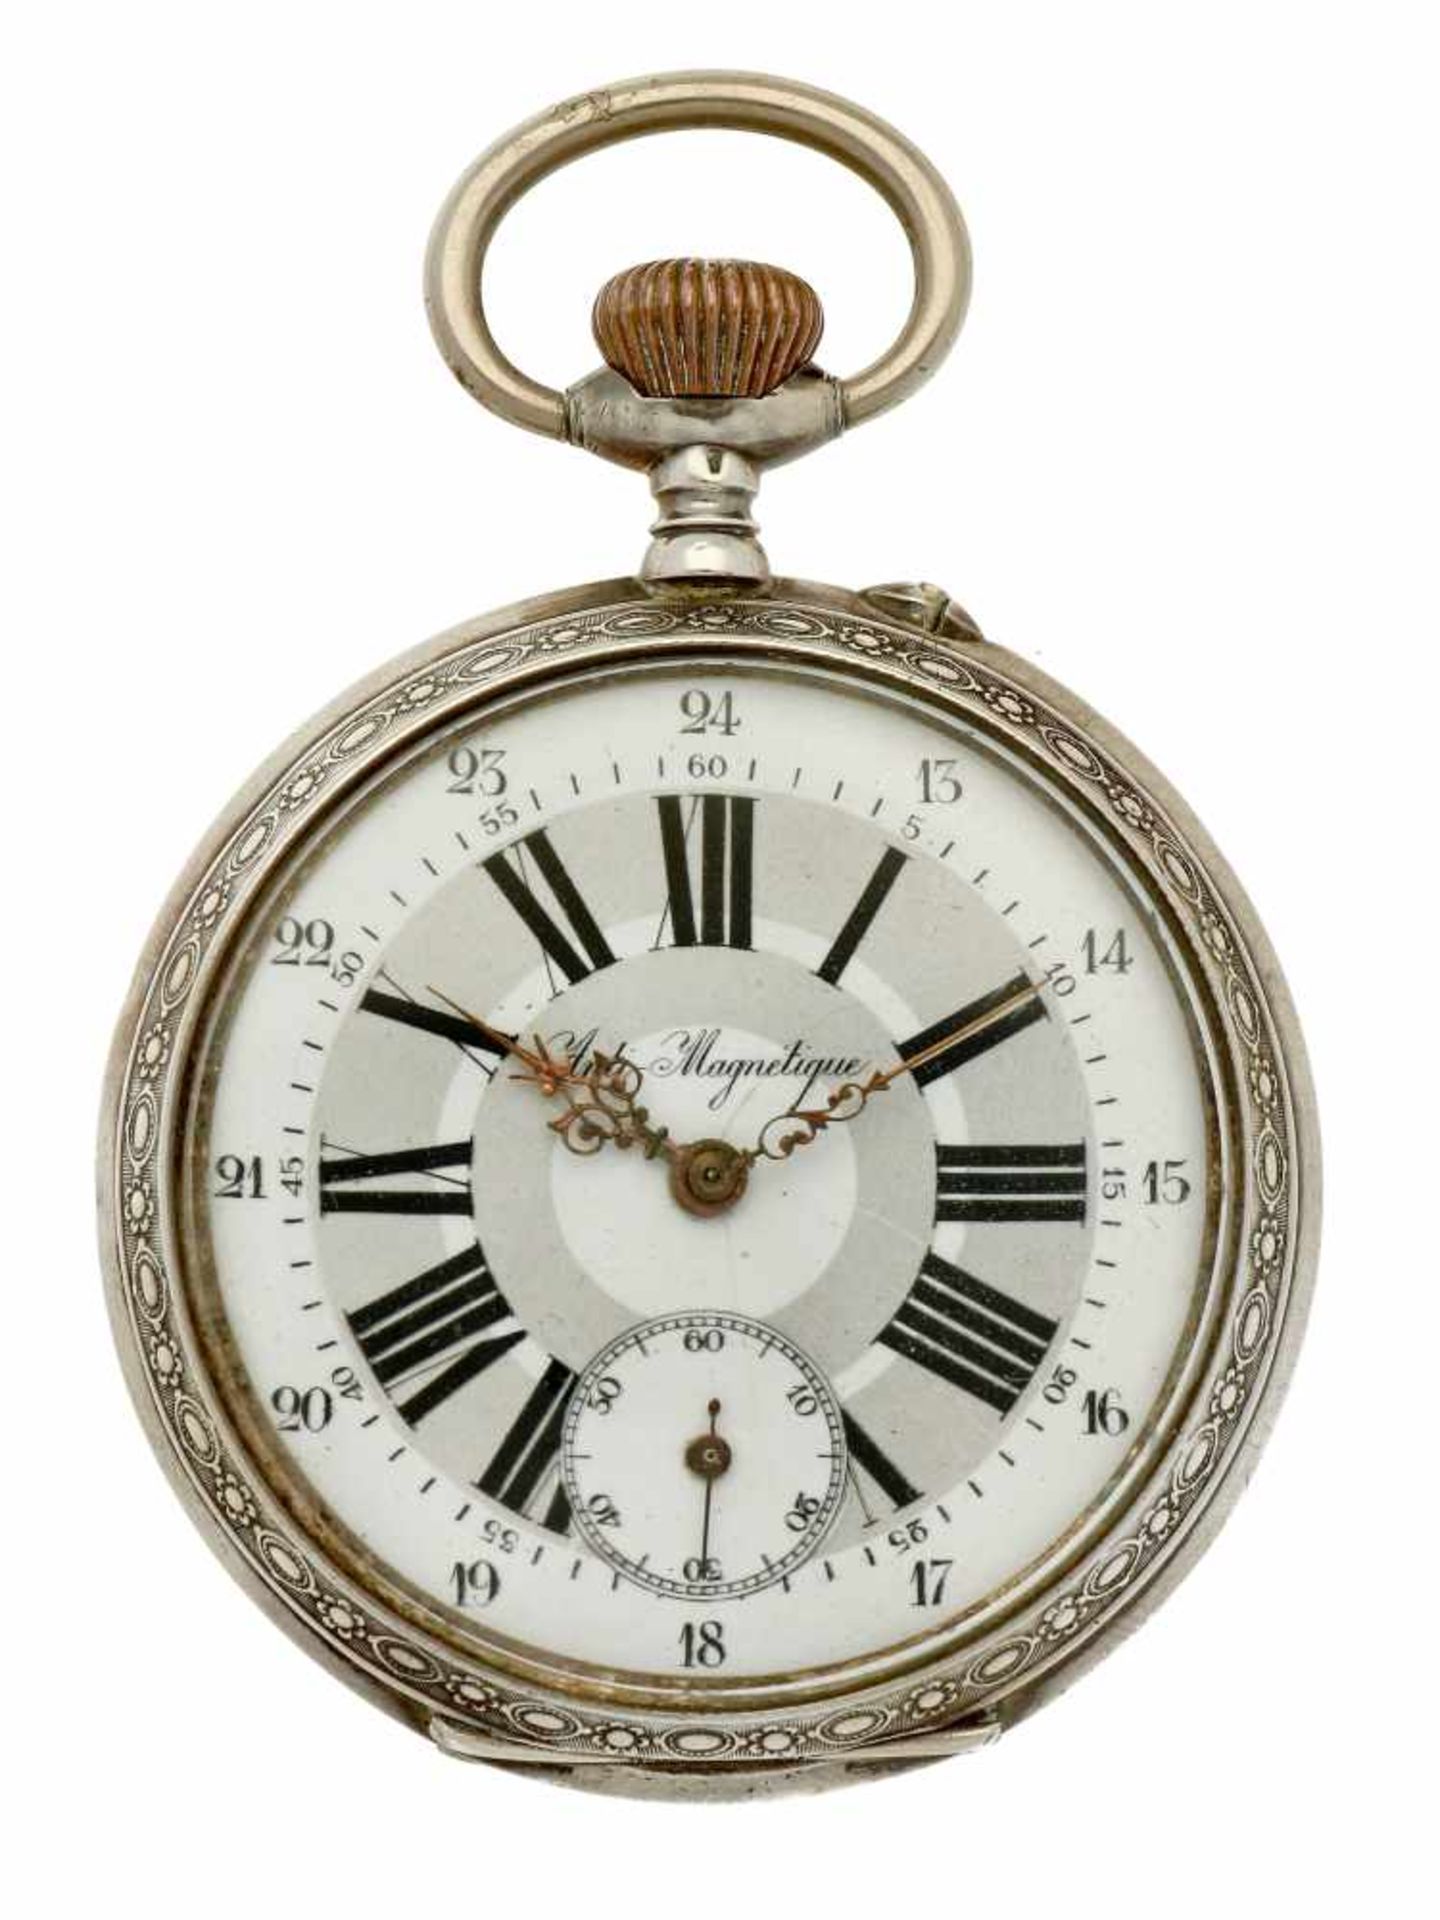 Pocket watch silver, anchor escapement - Men's pocket watch - Manual winding - Ca. 1900.